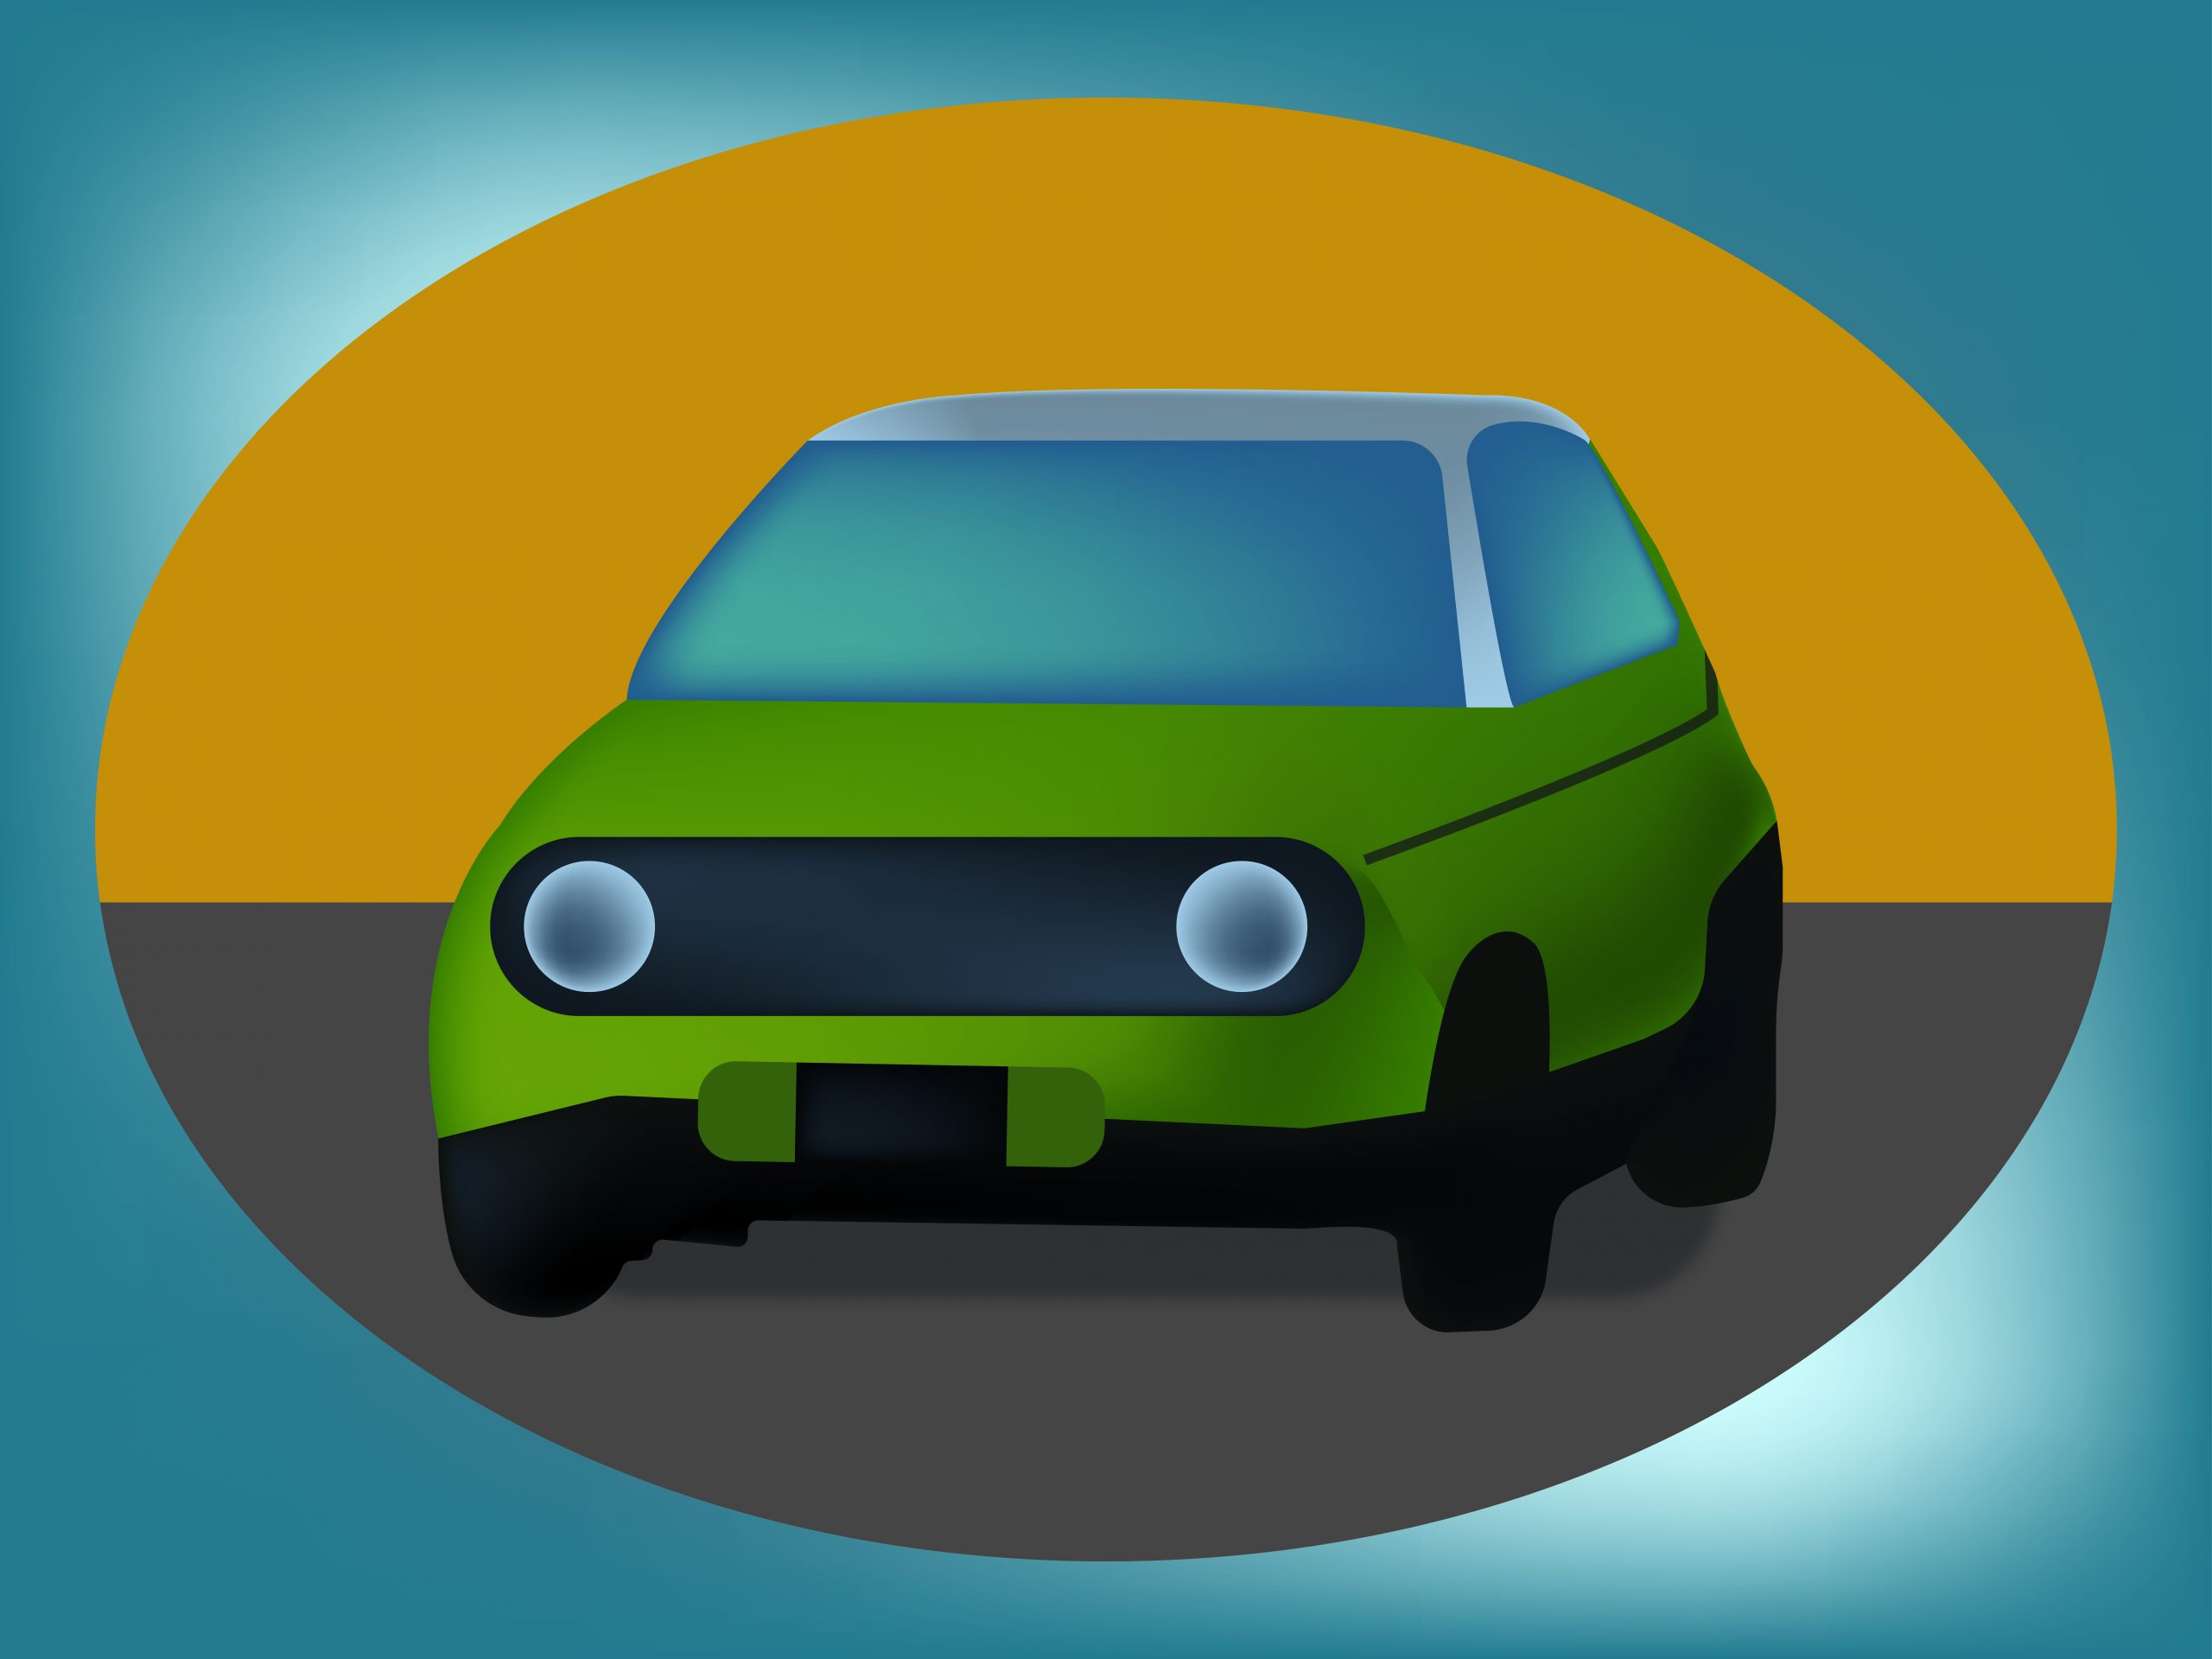 A car illustration